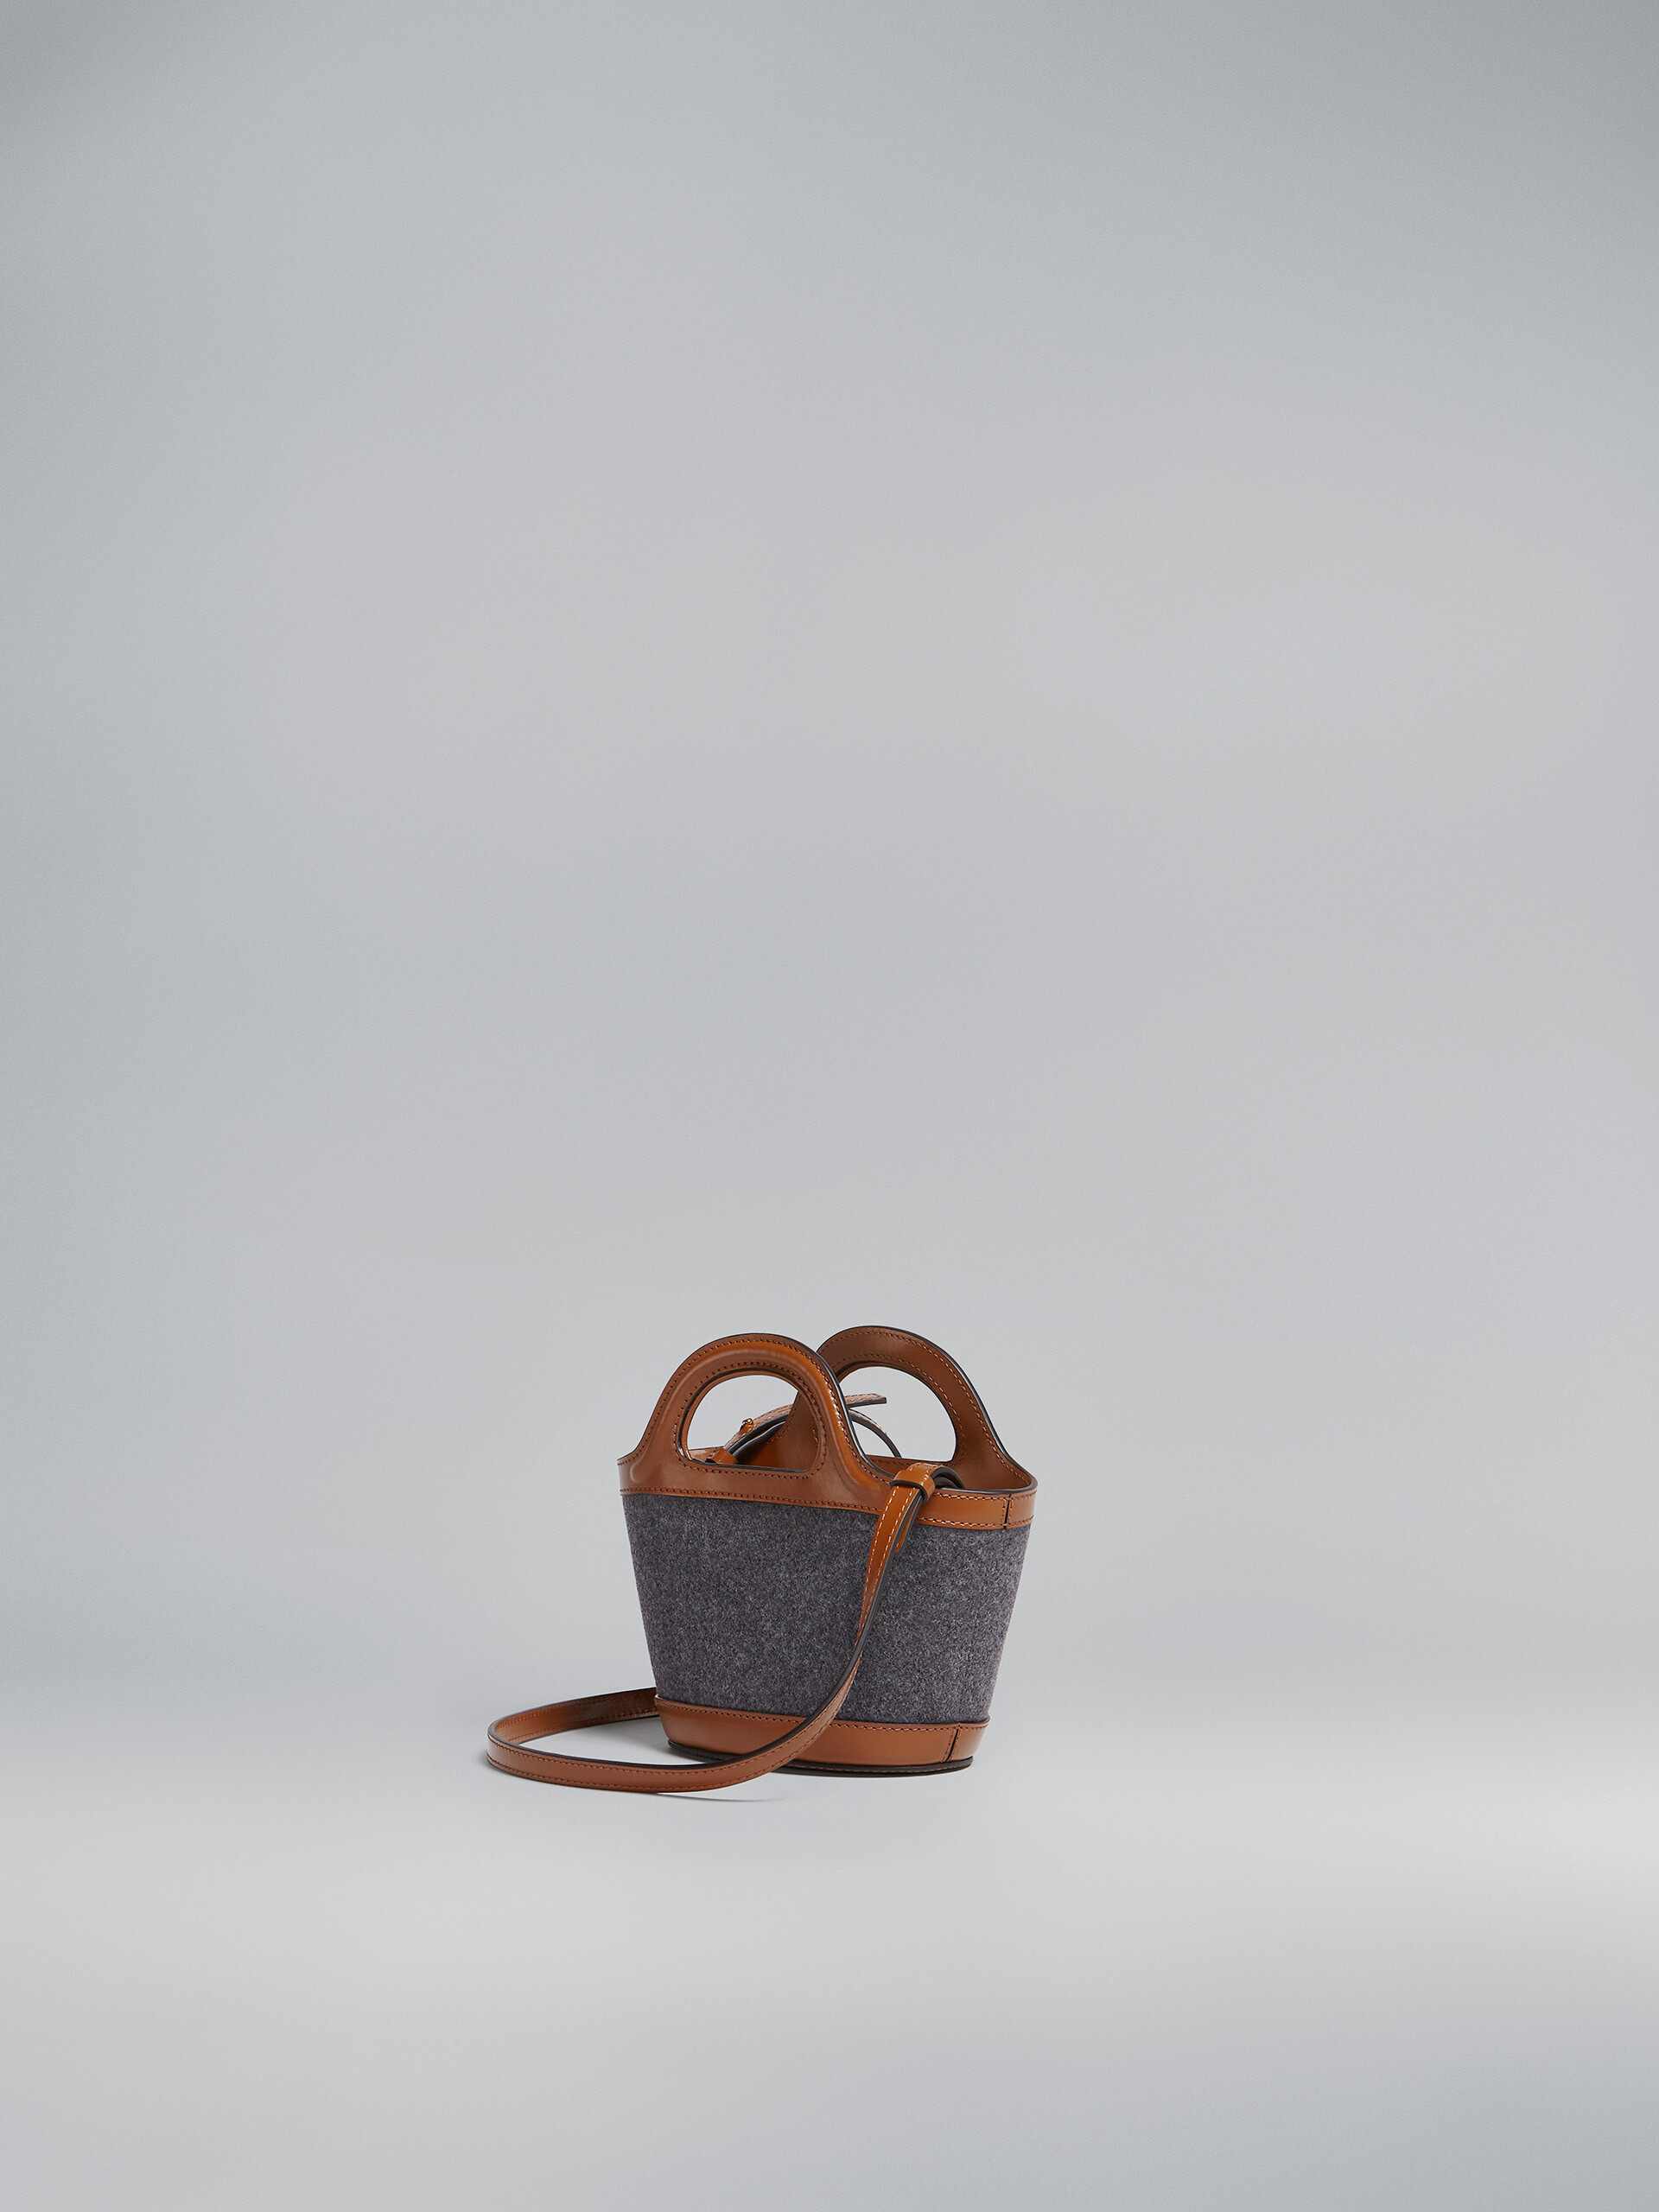 TROPICALIA micro bag in felt and leather - Handbag - Image 3